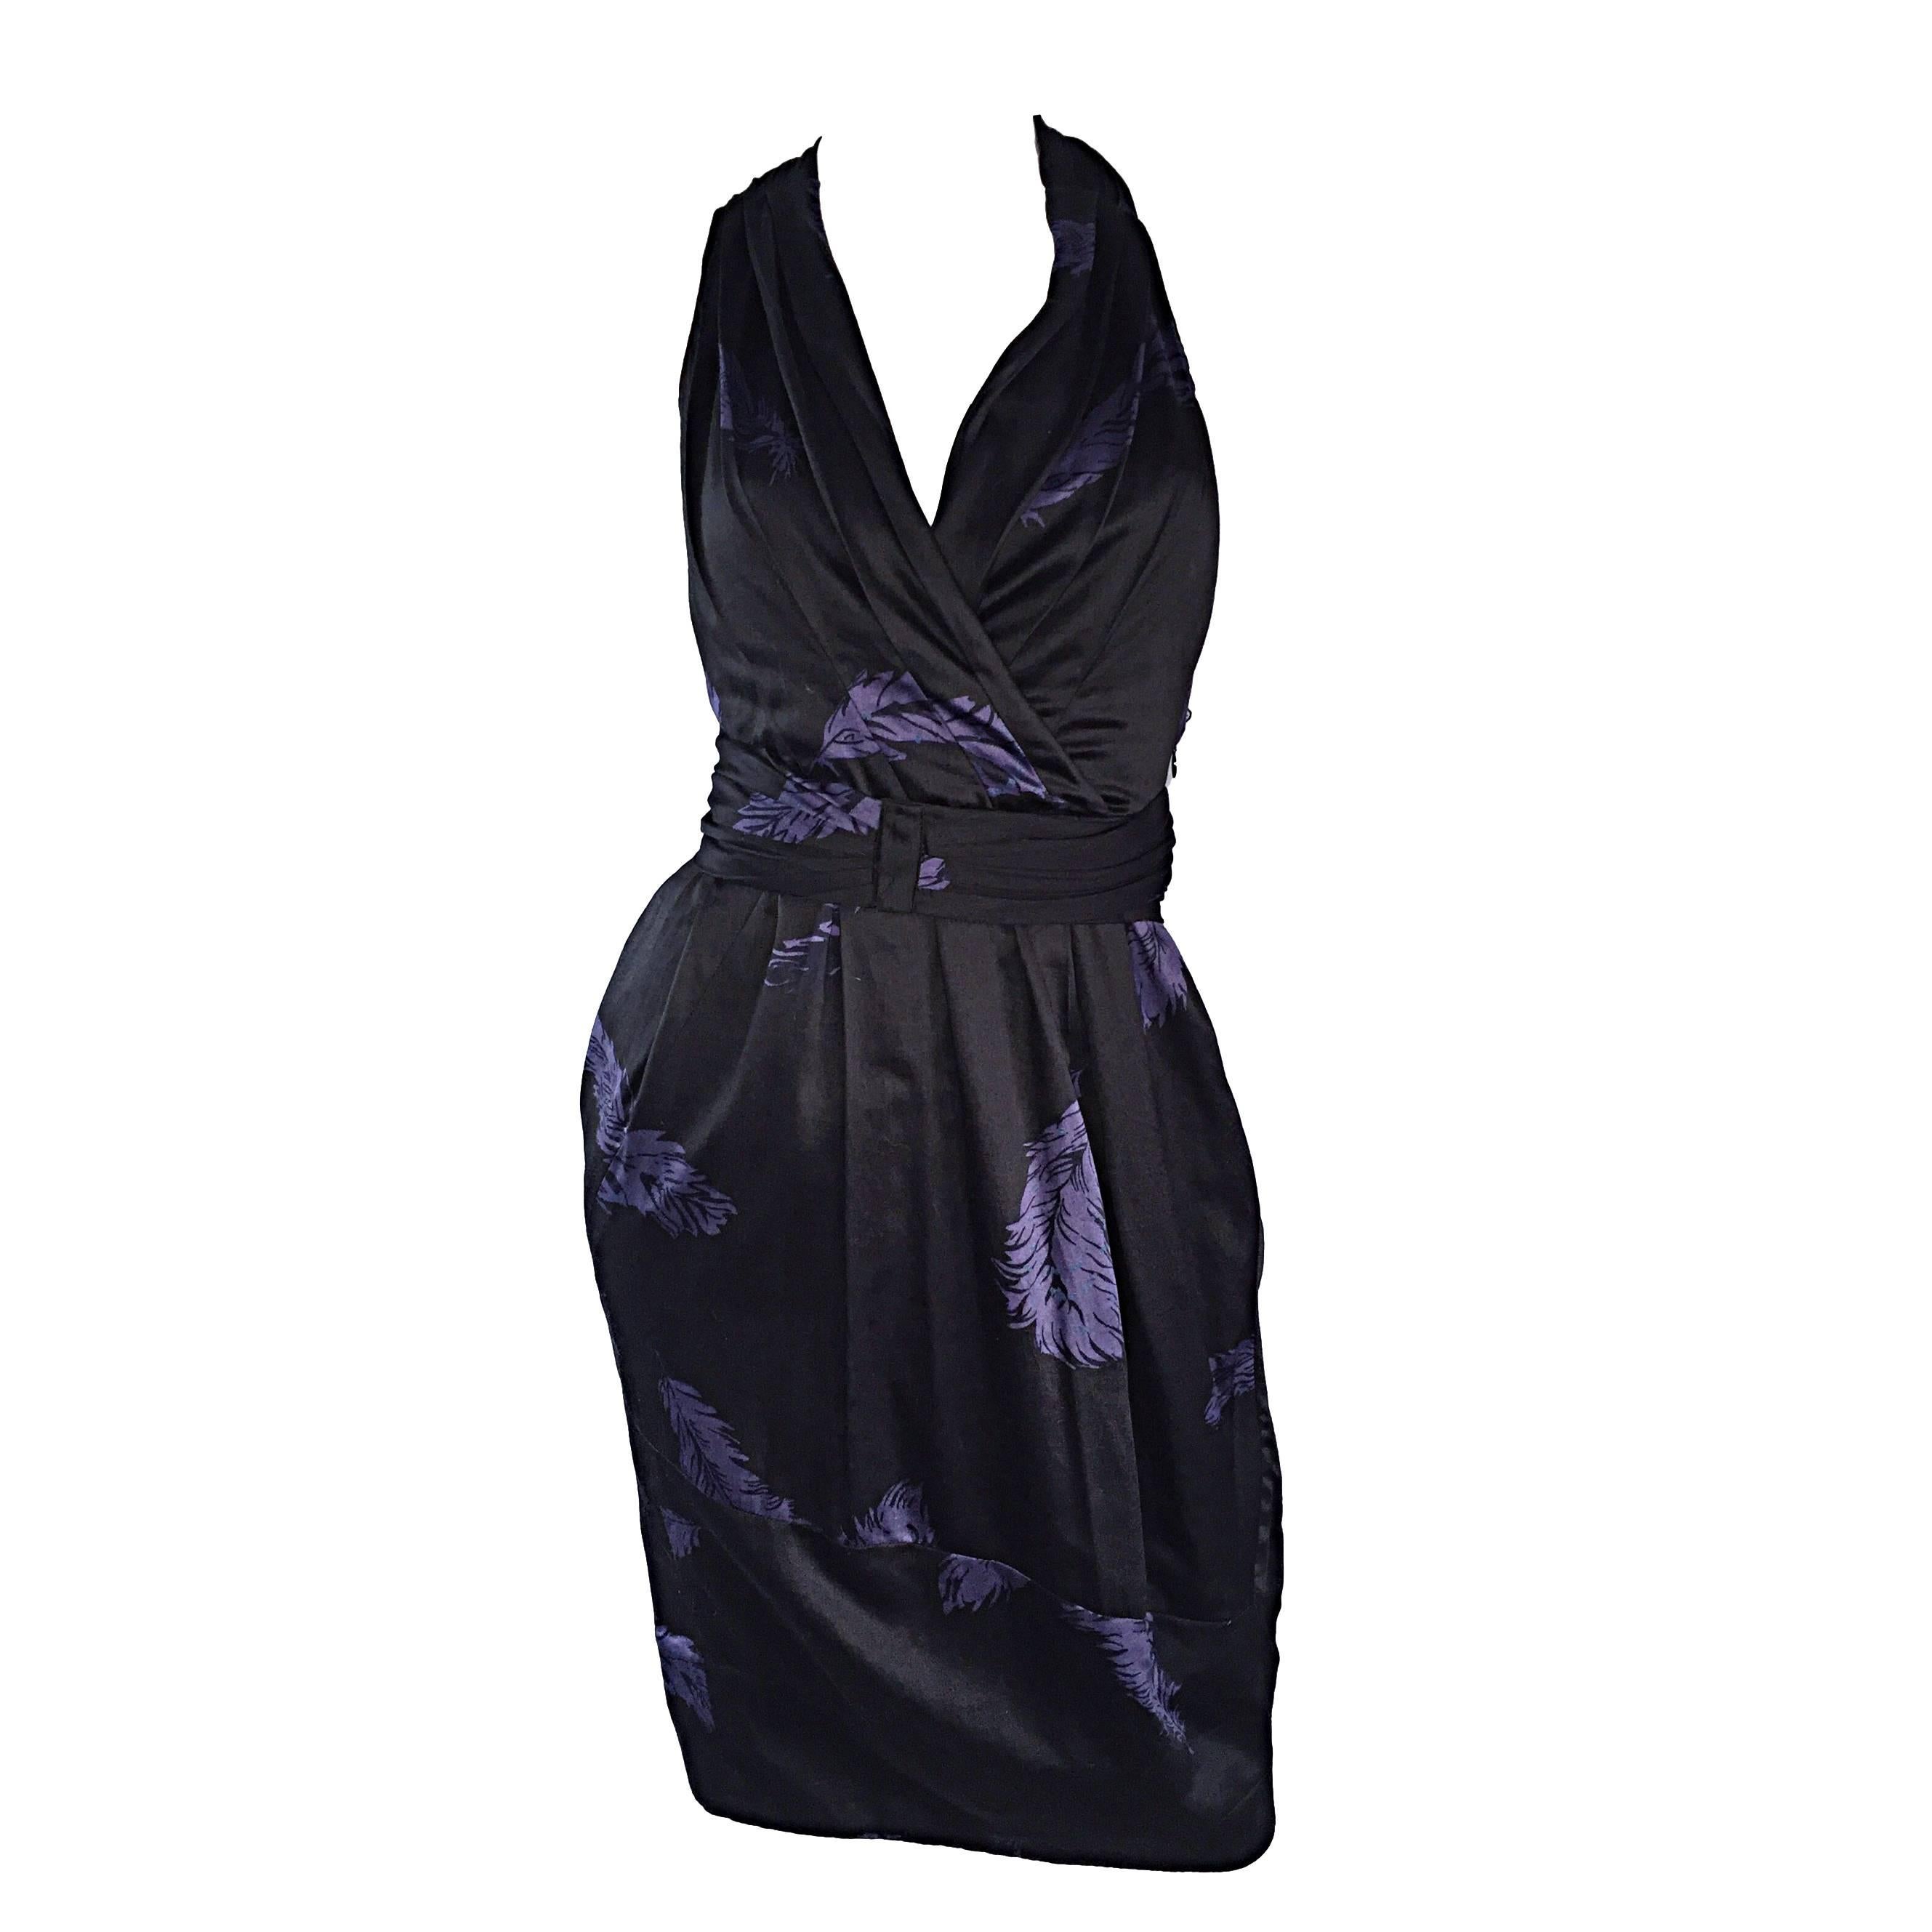 Marc Jacobs Sz 8 Black Purple Peacock Feather Print Cut Out Back Racerback Dress For Sale